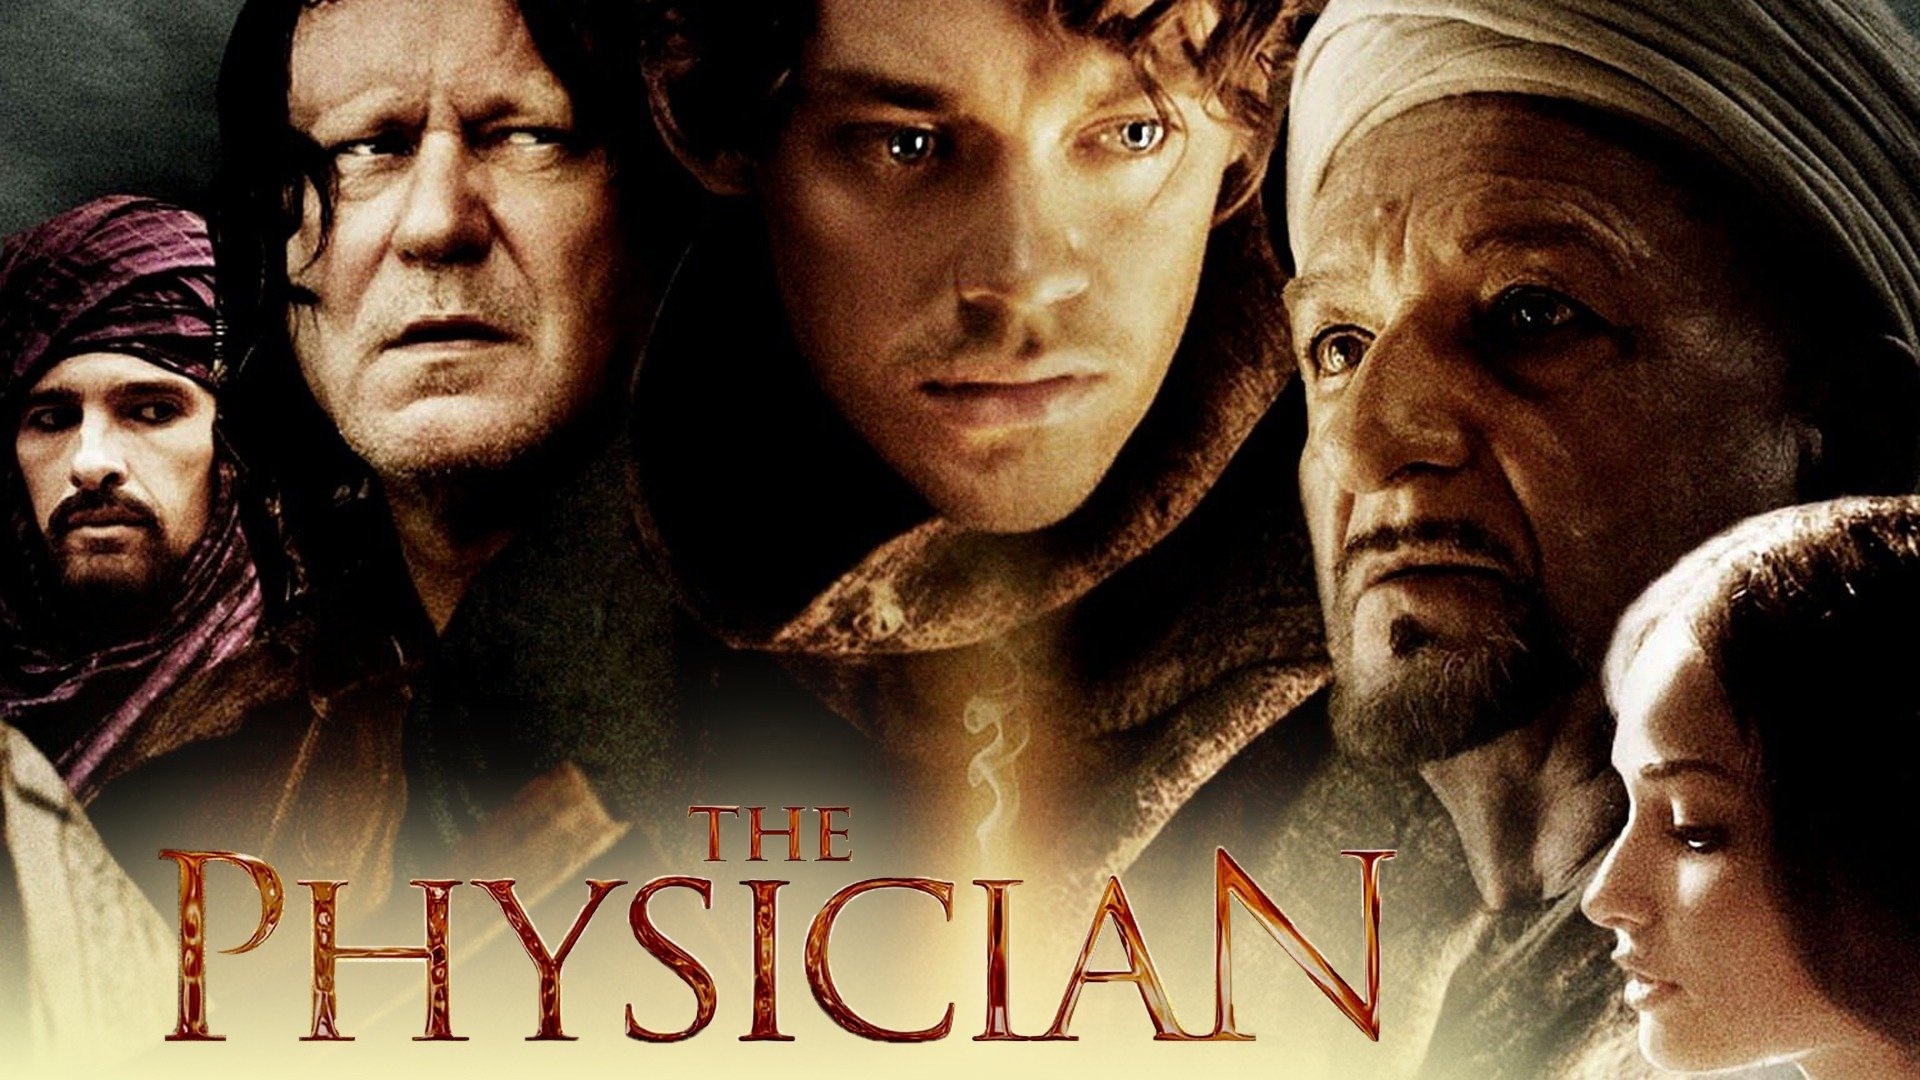 The Physician 2013, Watch full movie online, Drama film, Plex streaming service, 1920x1080 Full HD Desktop